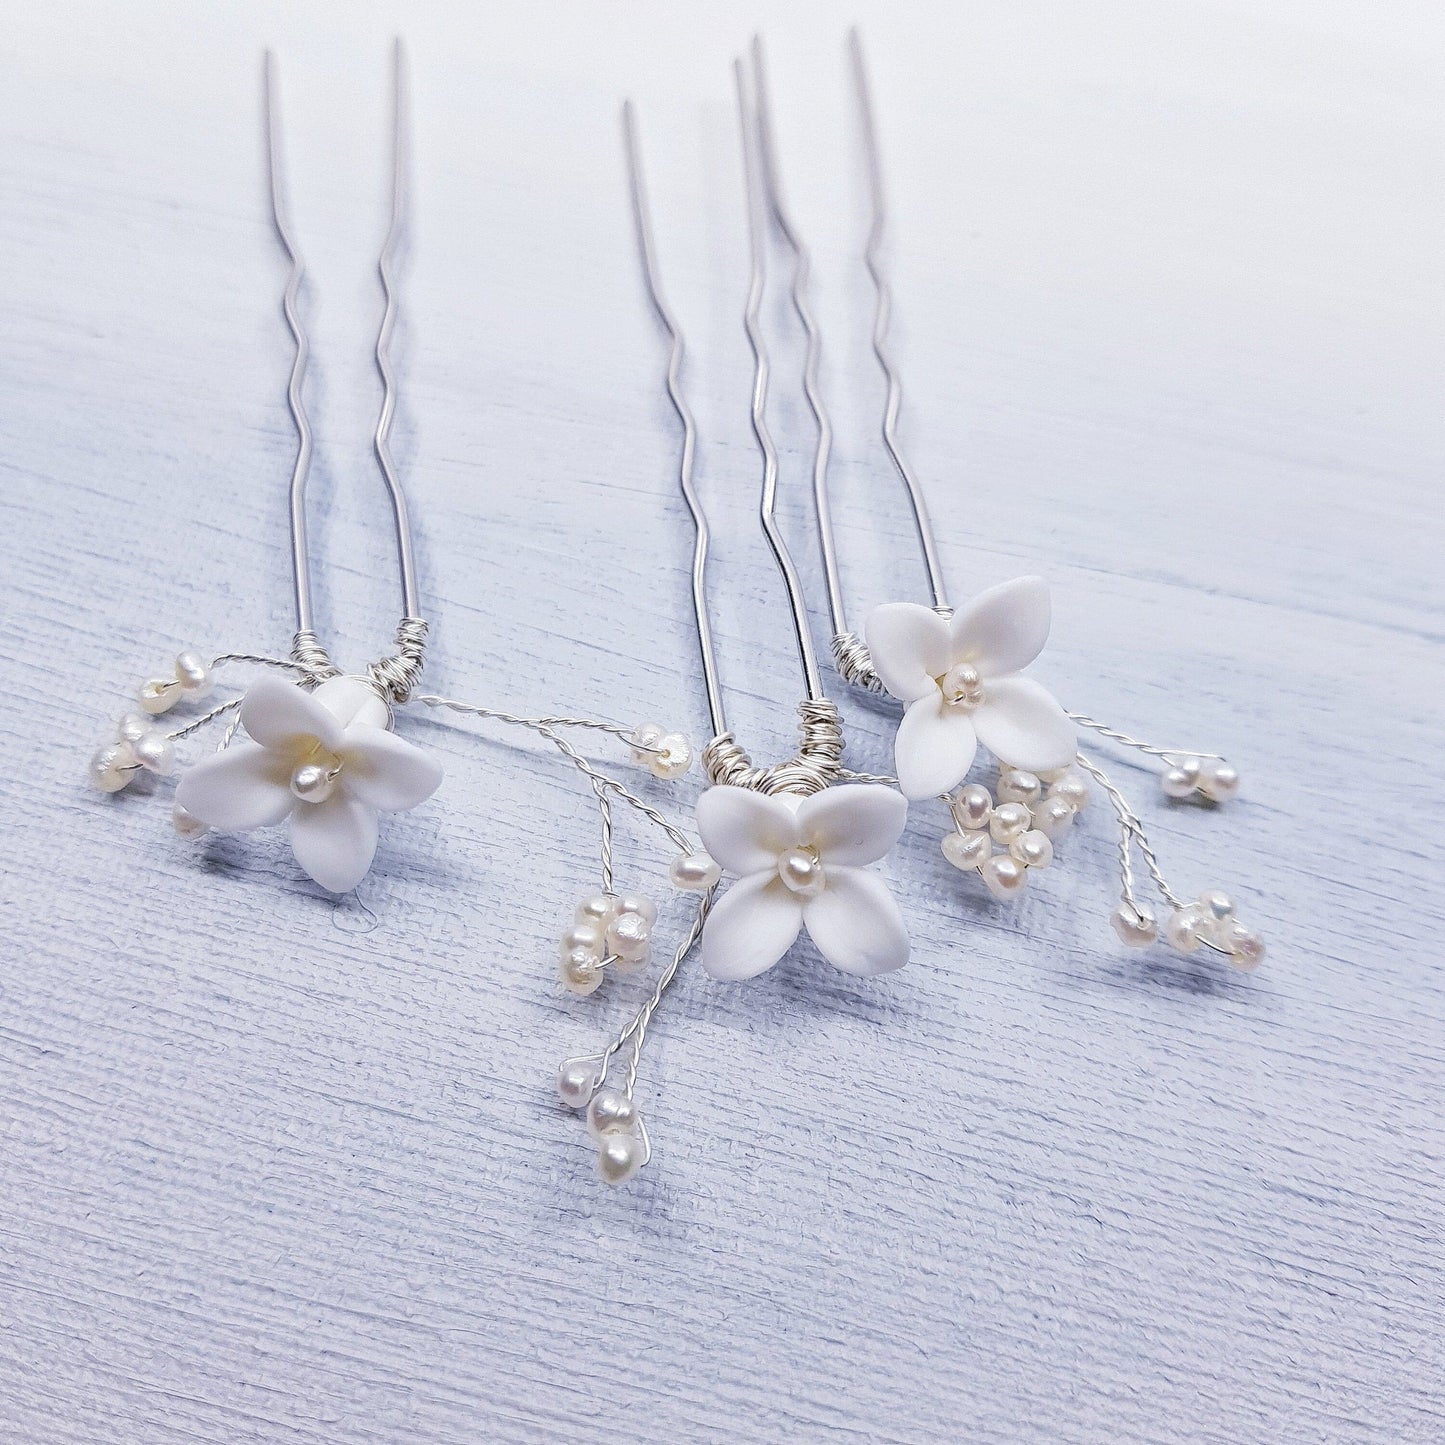 PETITE PERLE FLEUR Hair Pins Set of 3 White Flowers Hairpins Pearl crystal bridal Wedding Hair Pin Headpiece Accessories Australia Handmade